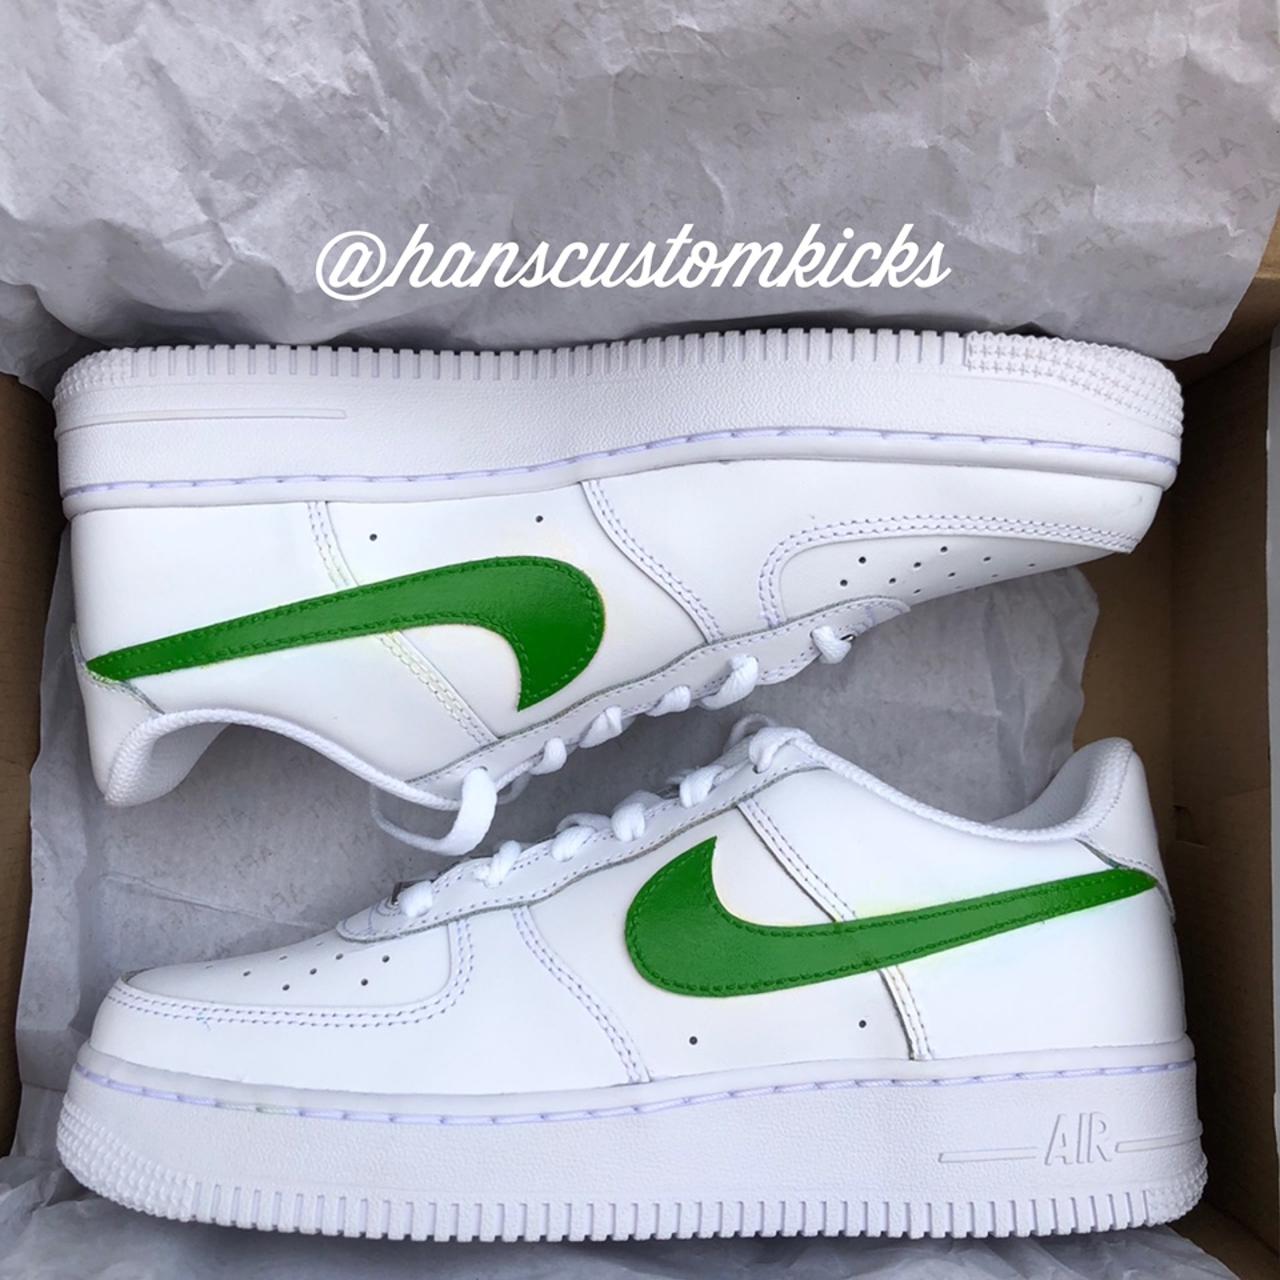 Nike Air Force 1 sneaker Beautiful neon green, - Depop